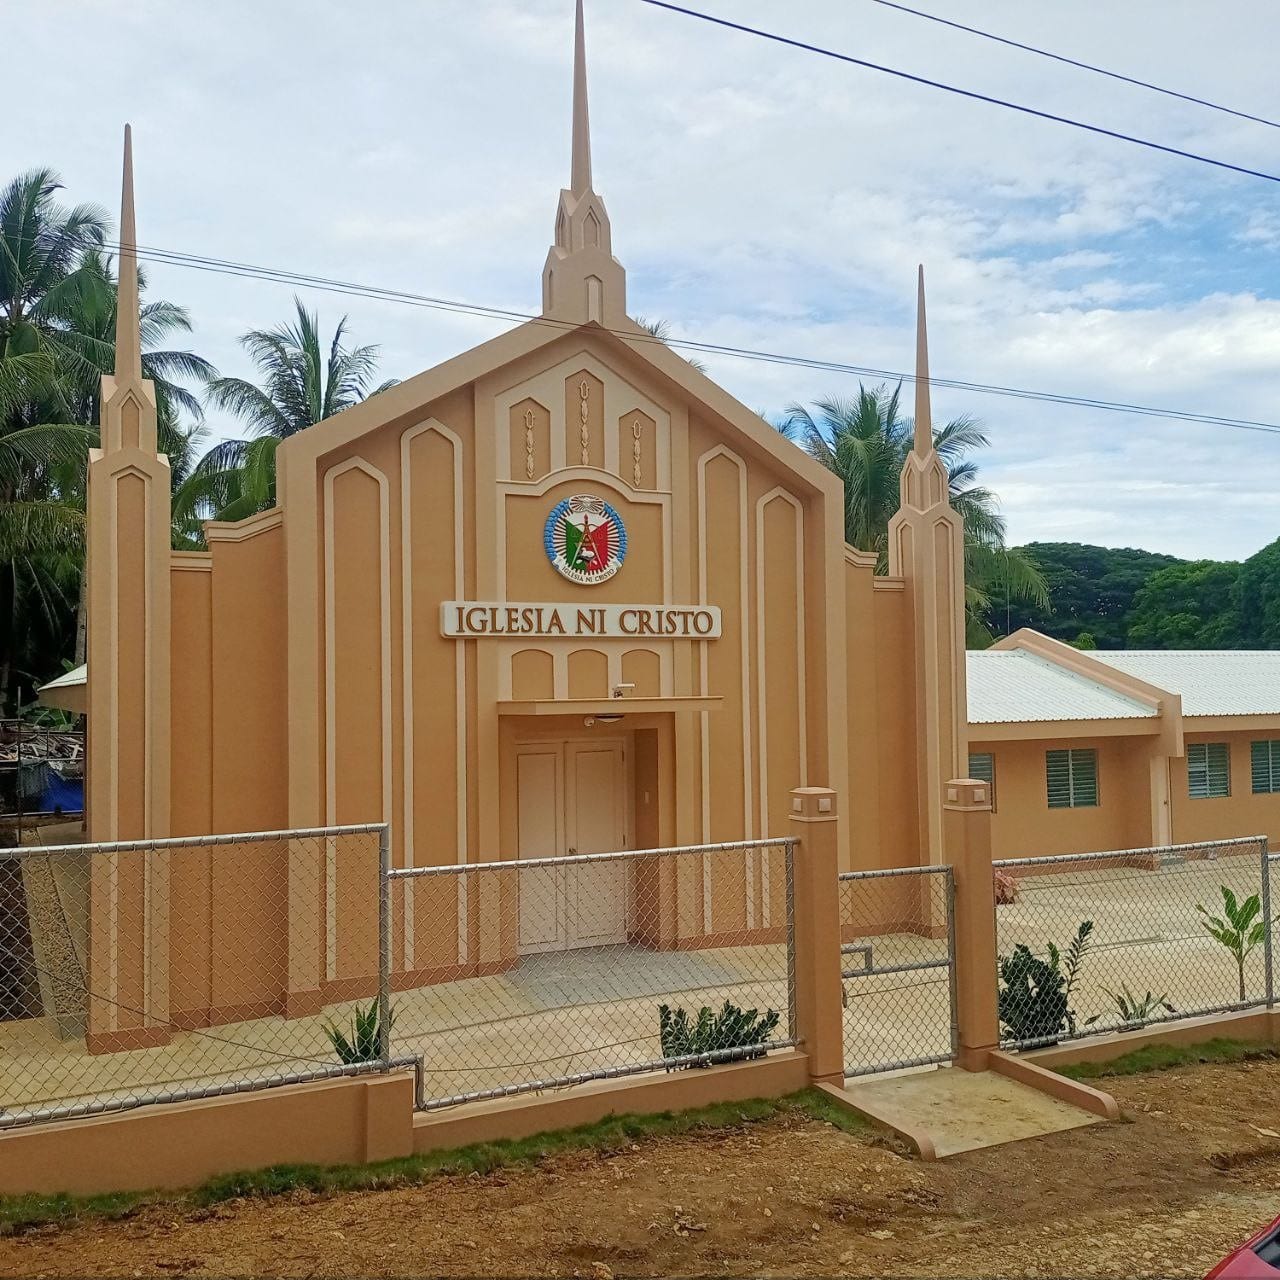 Peña, Masbate house of worship rededicated to God